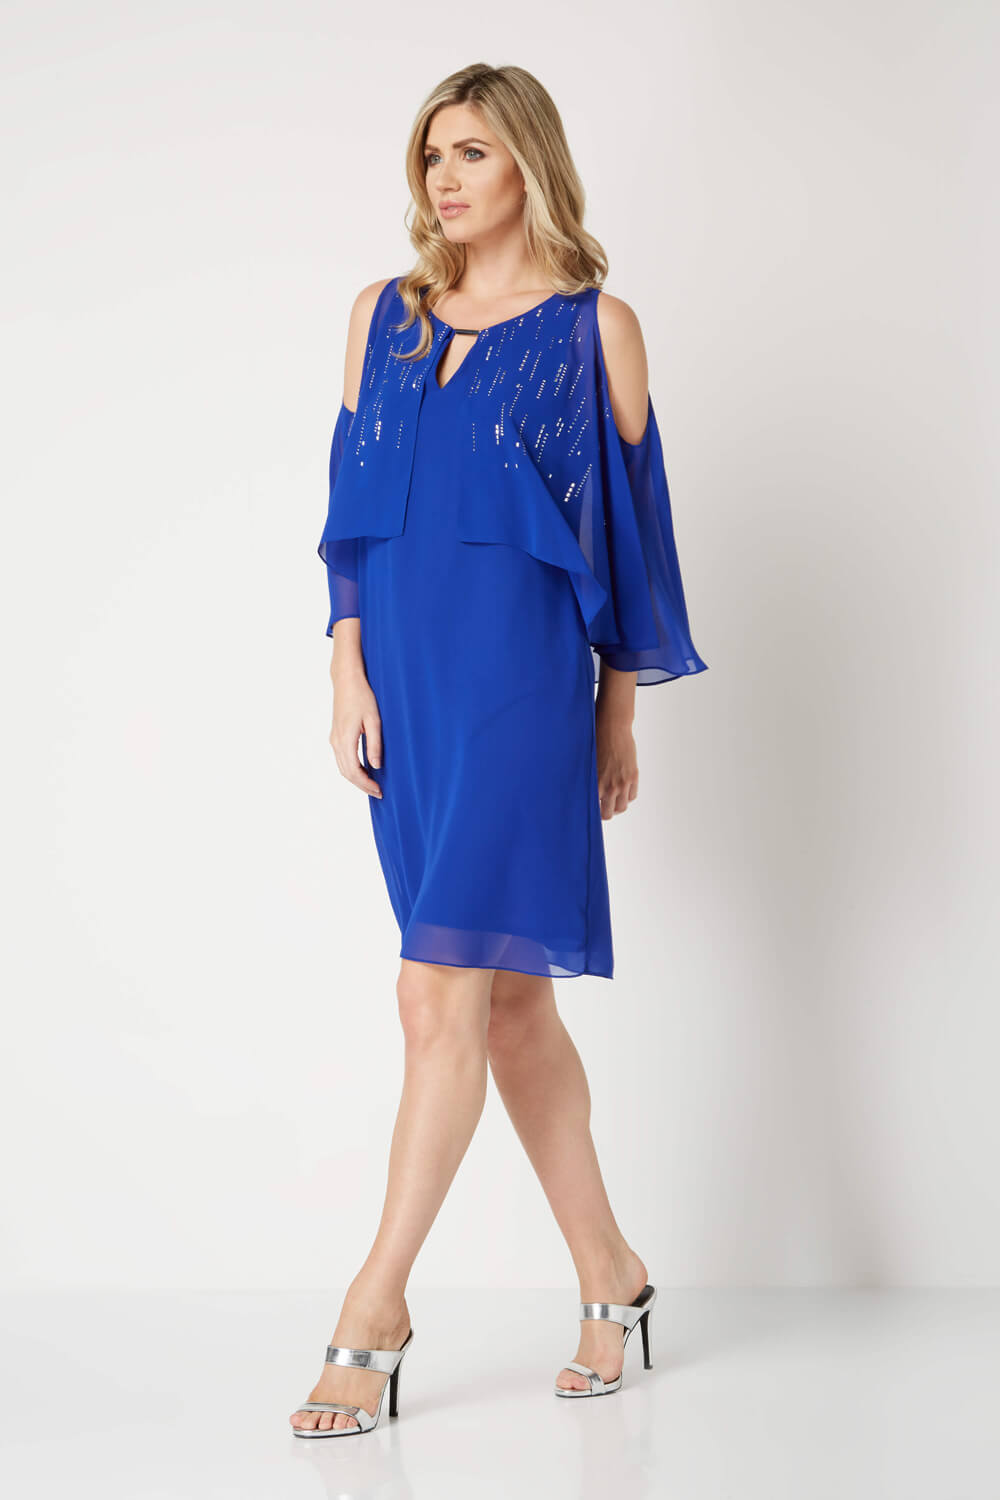 Royal Blue Sparkle Chiffon Overlay Dress, Image 2 of 5